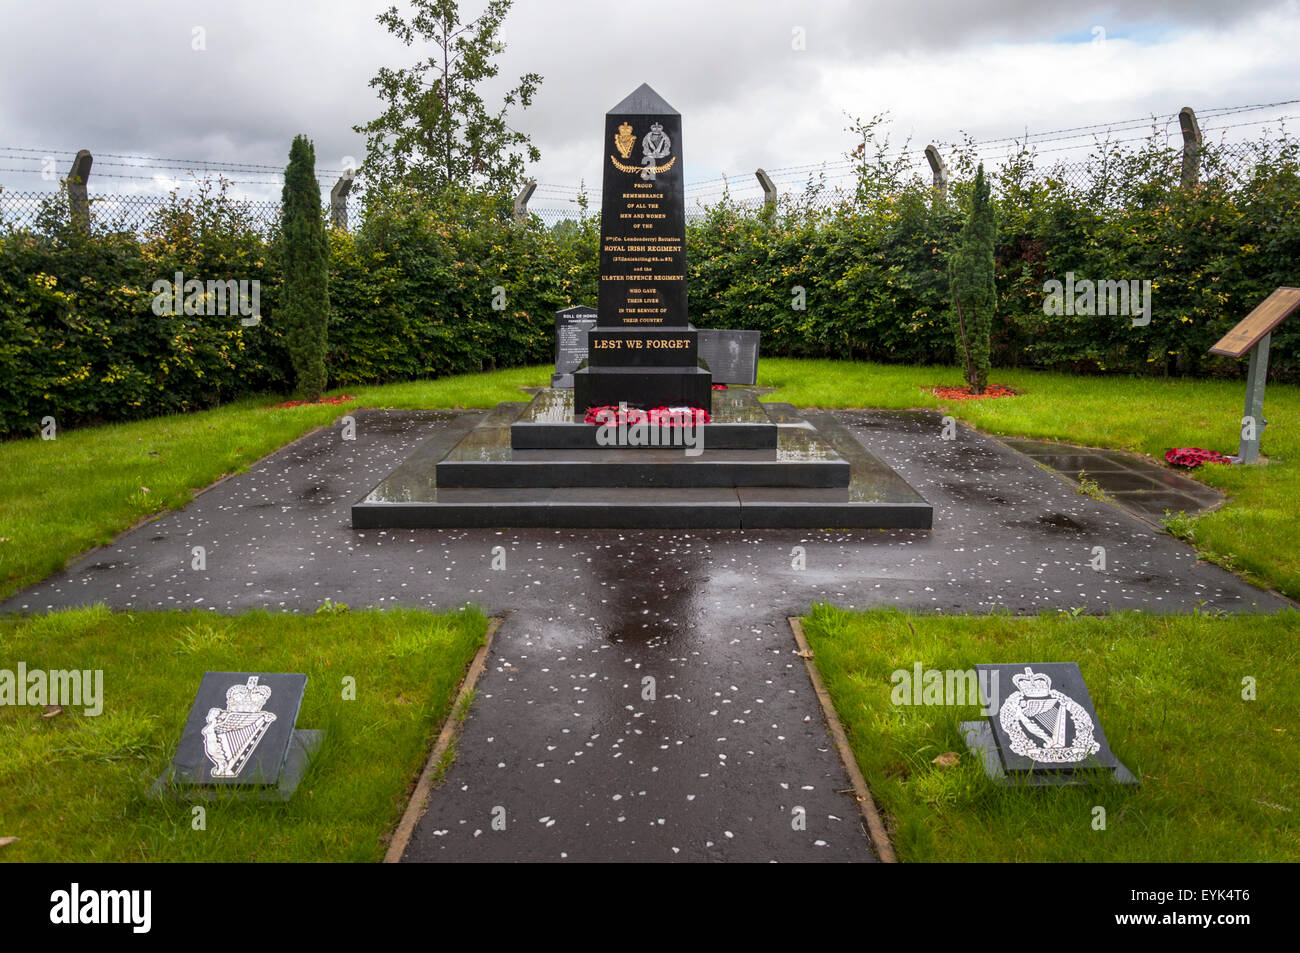 Memorial Garden à Tamlaghtfinlagan église paroissiale, Ballykelly, Irlande du Nord Banque D'Images